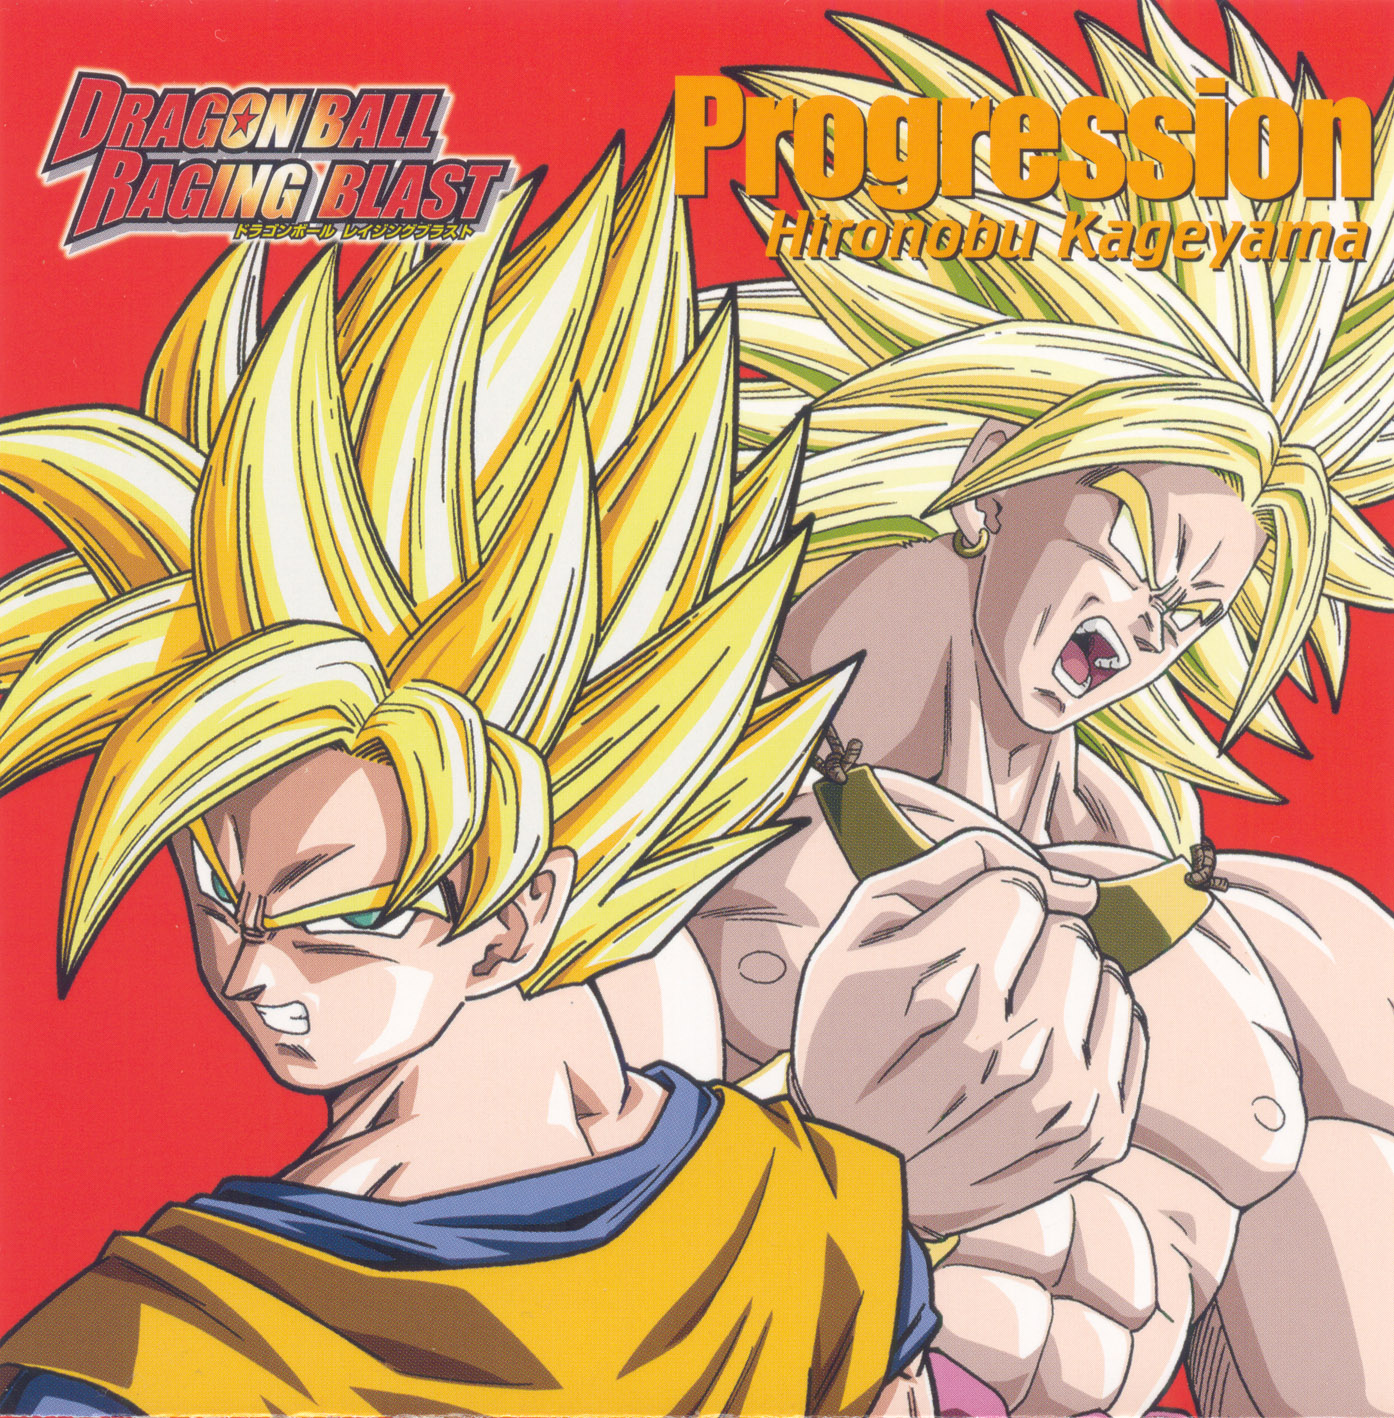 Dragon Ball Z - Budokai Tenkaichi 3 Japan (PS2) (gamerip) (2007) MP3 - Download  Dragon Ball Z - Budokai Tenkaichi 3 Japan (PS2) (gamerip) (2007)  Soundtracks for FREE!